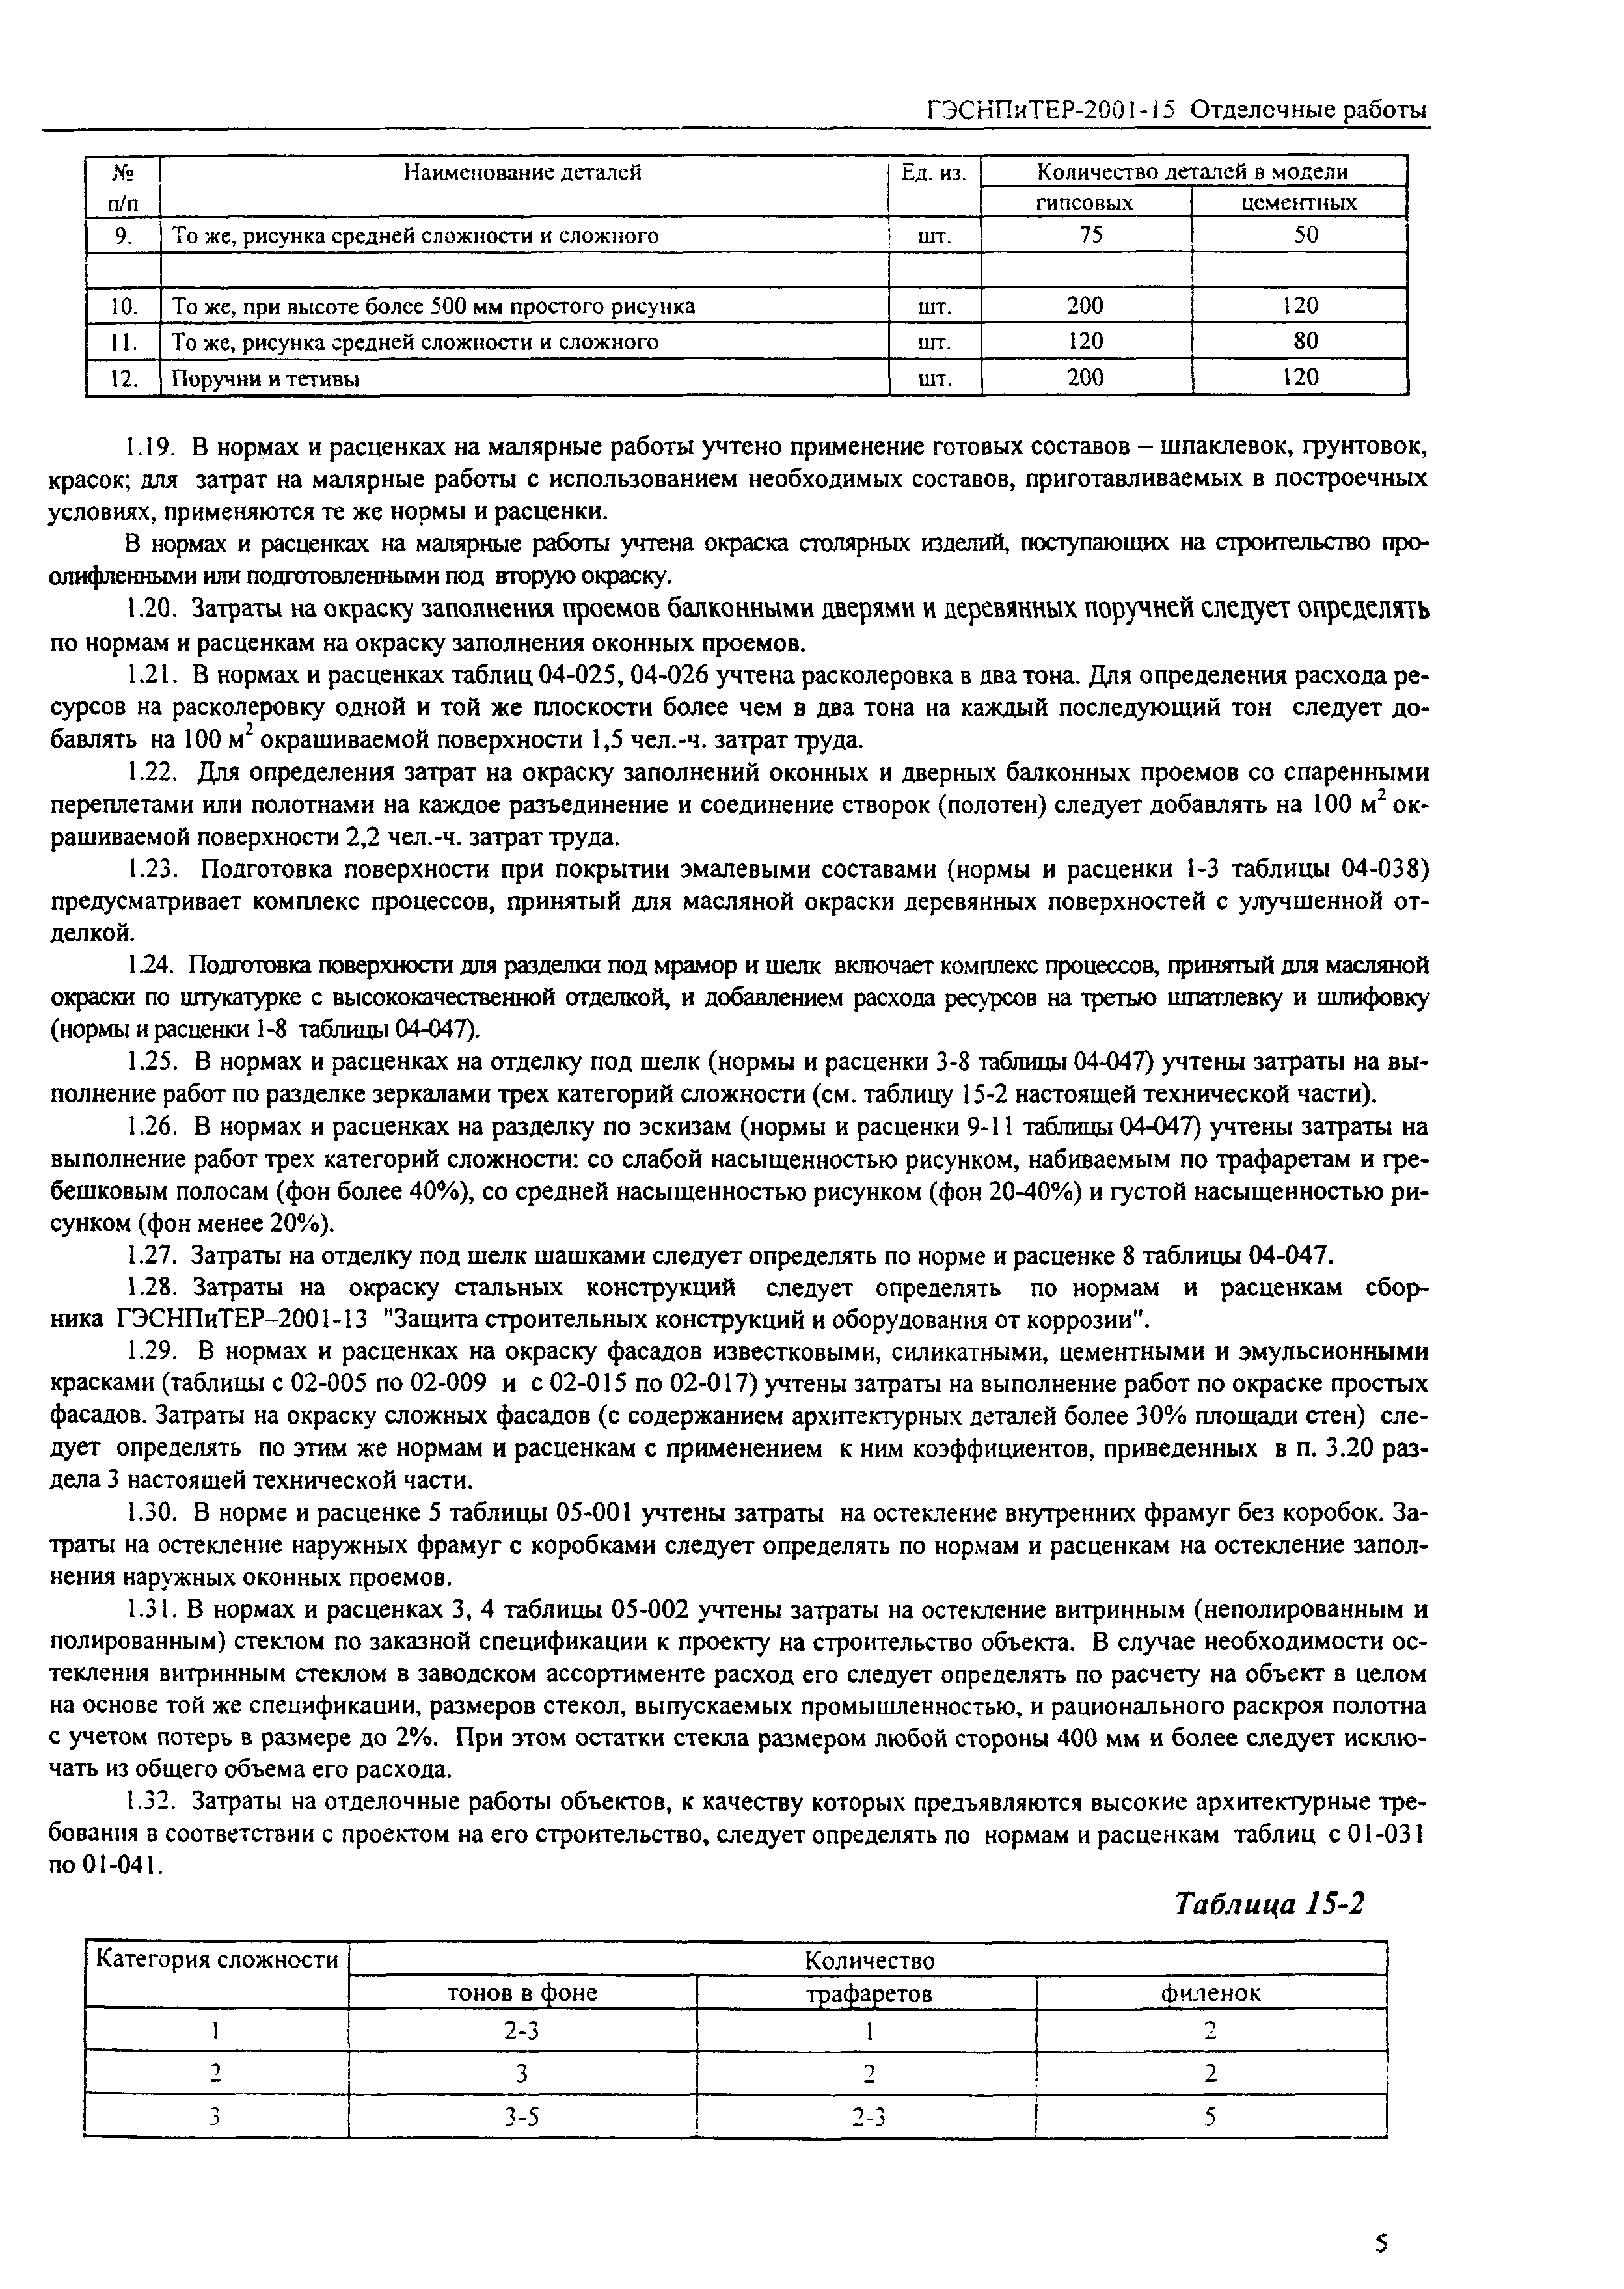 ГЭСНПиТЕР 2001-15 (I)